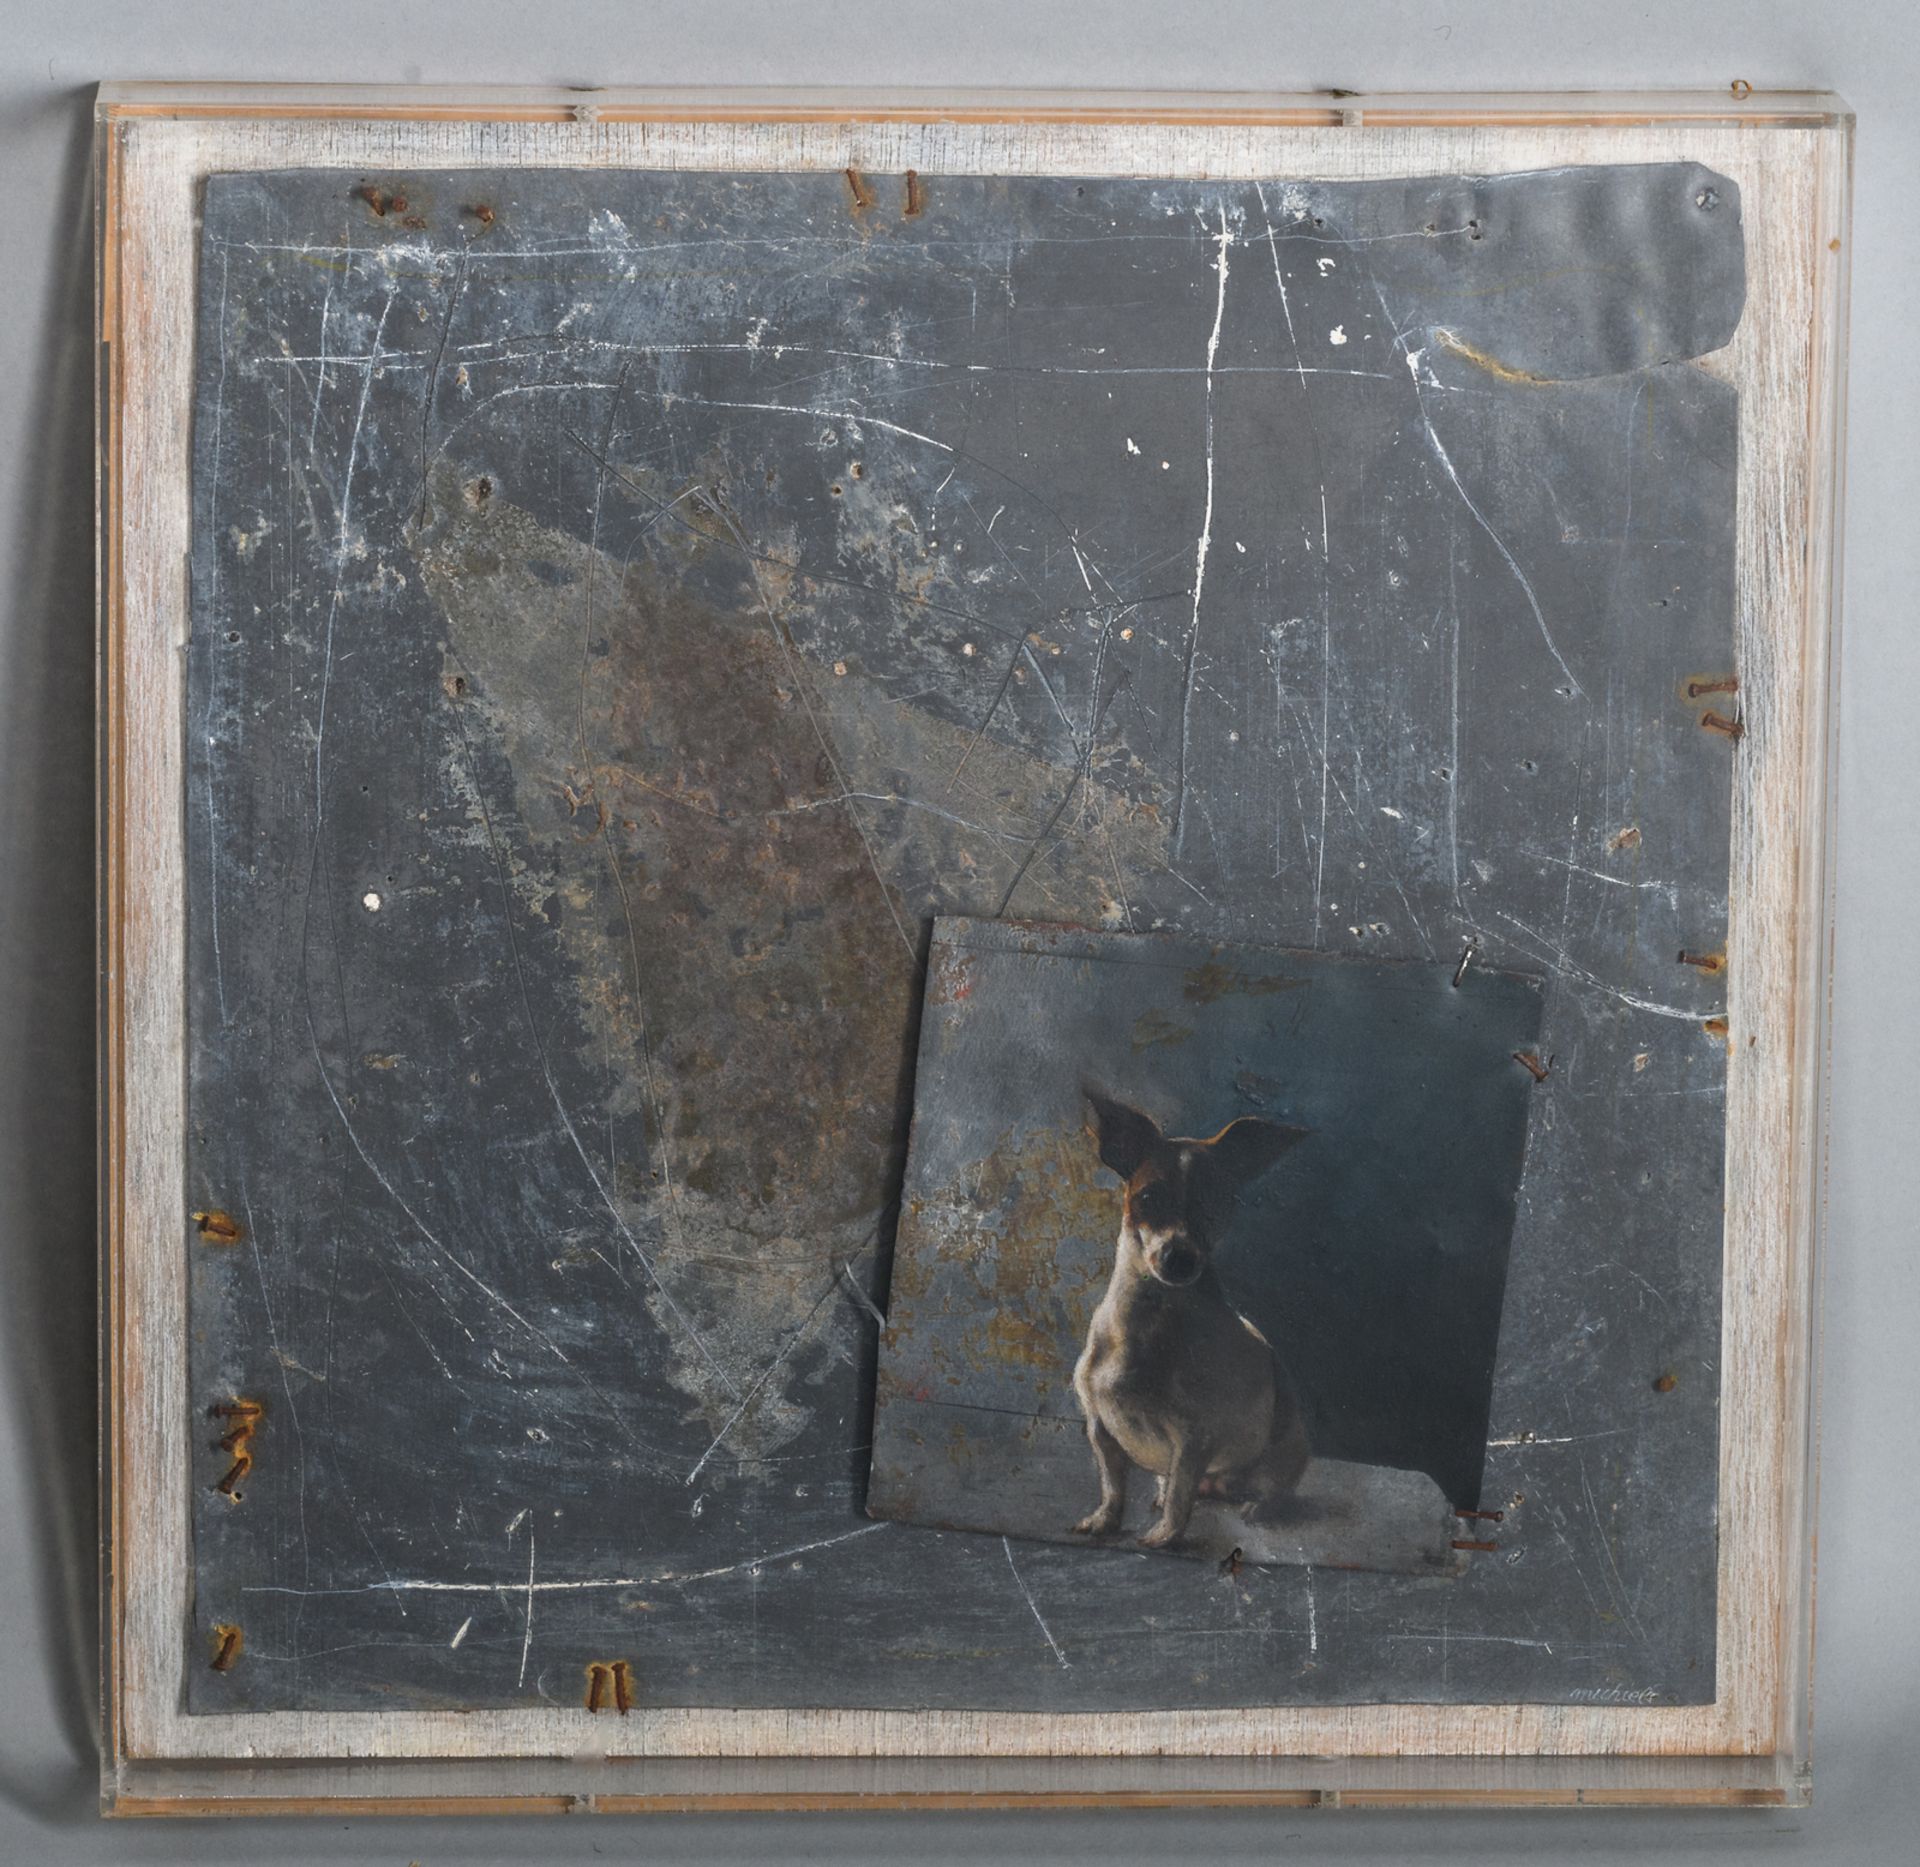 Michiels D., 'Tache', oil on zinc, dated 1998, in a plexi box, 36 x 36 cm - Image 3 of 6